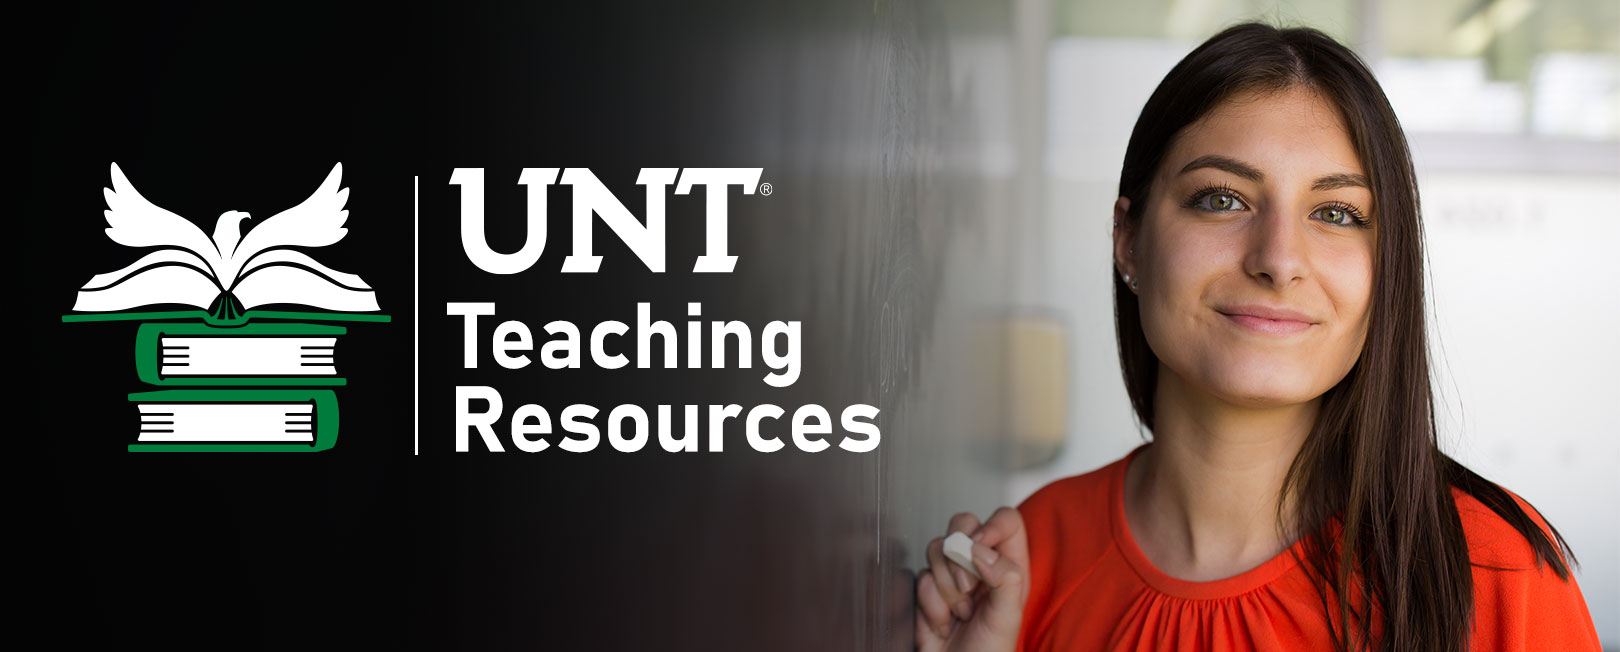 Teaching Resources banner - Lady near chalkboard